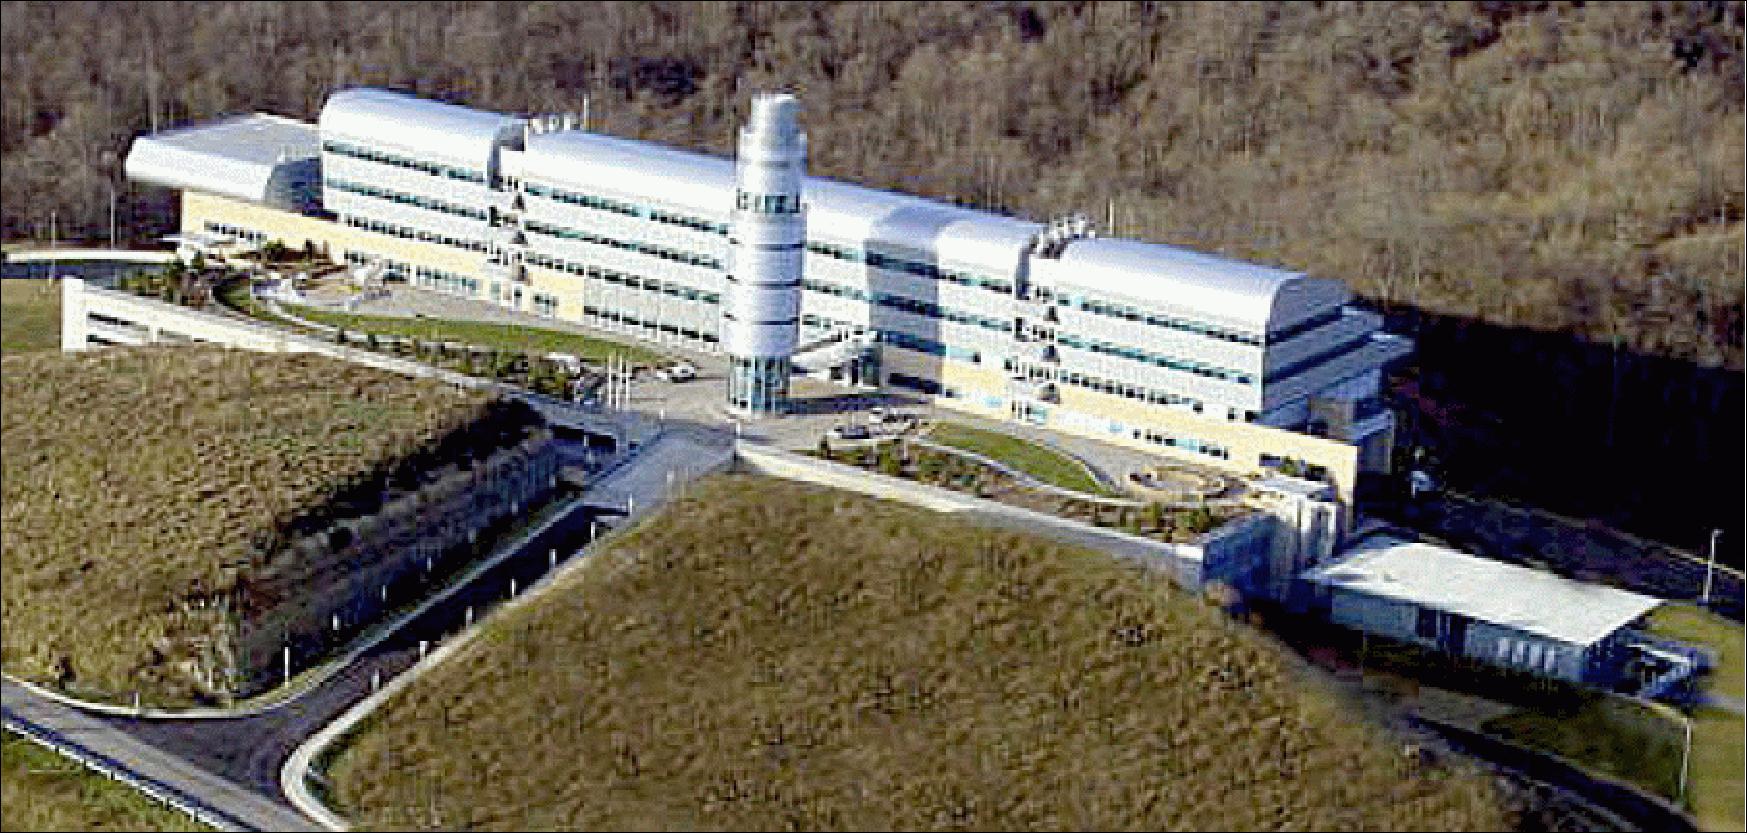 Figure 72: RBU (Remote Backup) Facility, Fairmont, W.VA (image credit: GOES-R GS Project, Ref. 127)